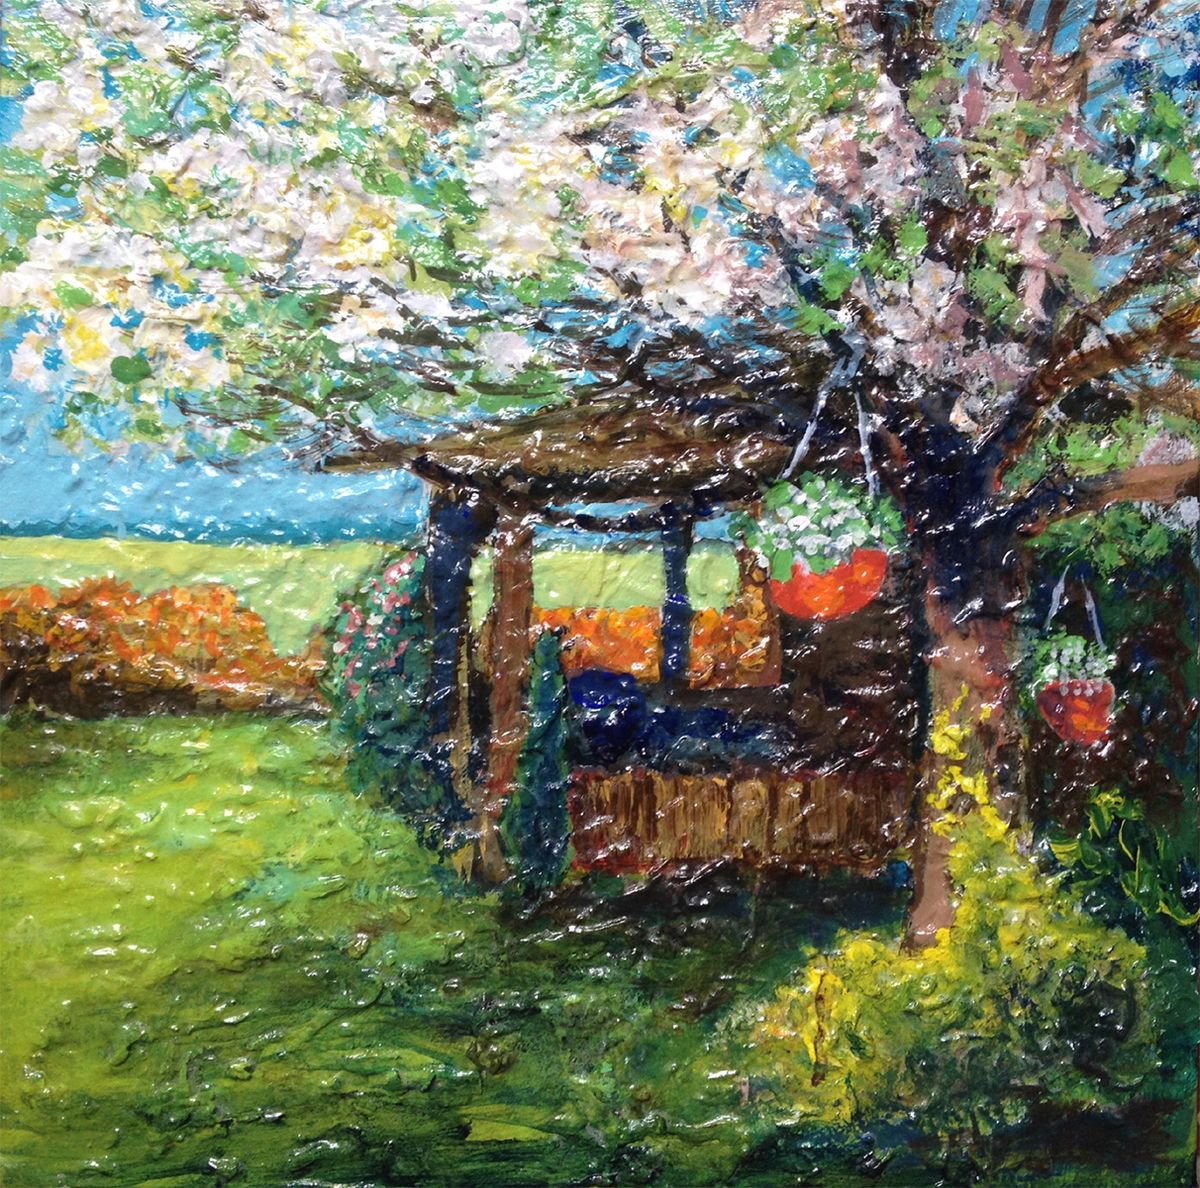 Springtime garden by Ren Goorman